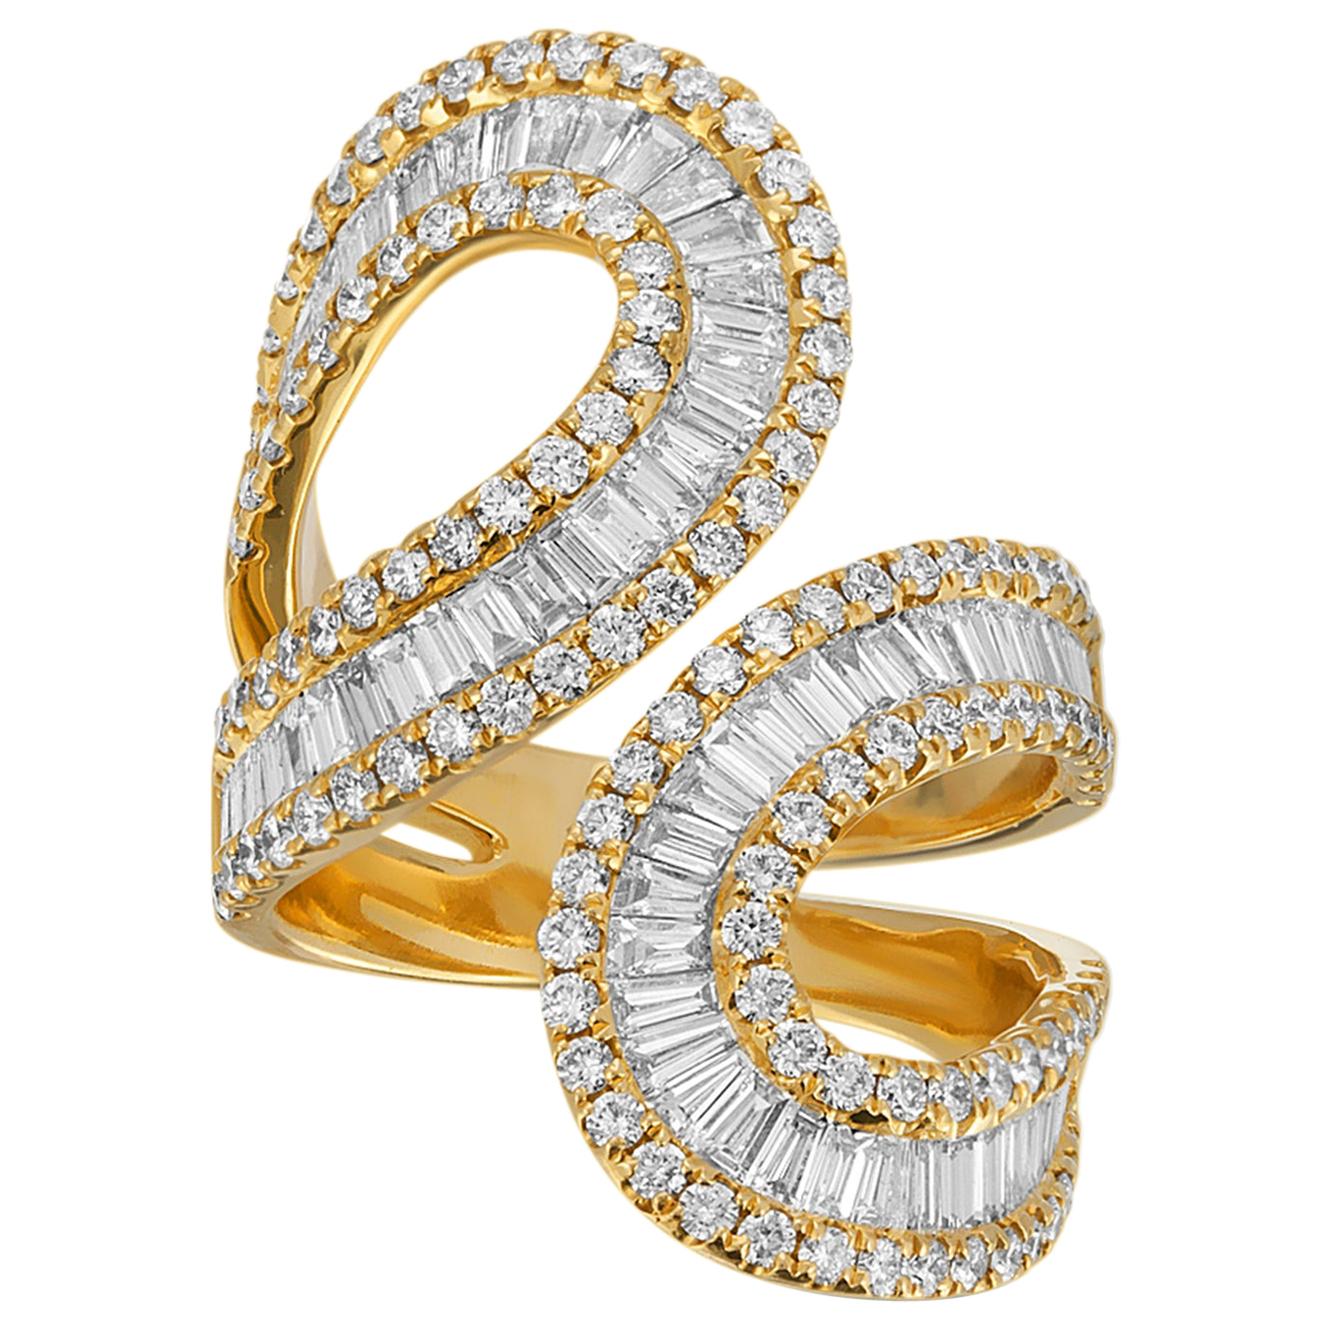 Fancy 18 Karat Yellow Gold 3.79 Carat Diamond Wrap Ring For Sale